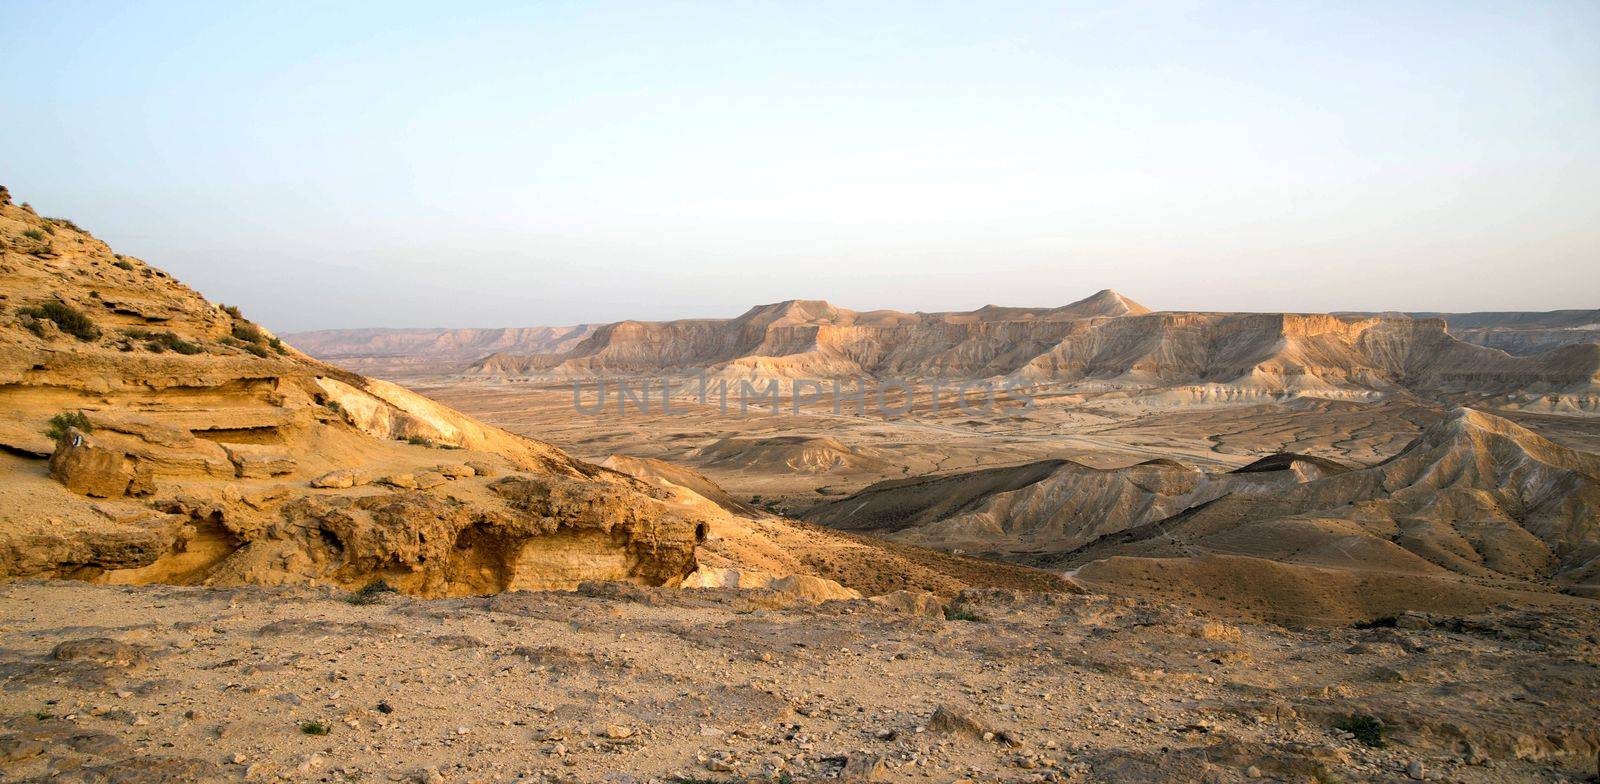 Hiking in stone desert mountain landscape of Israel